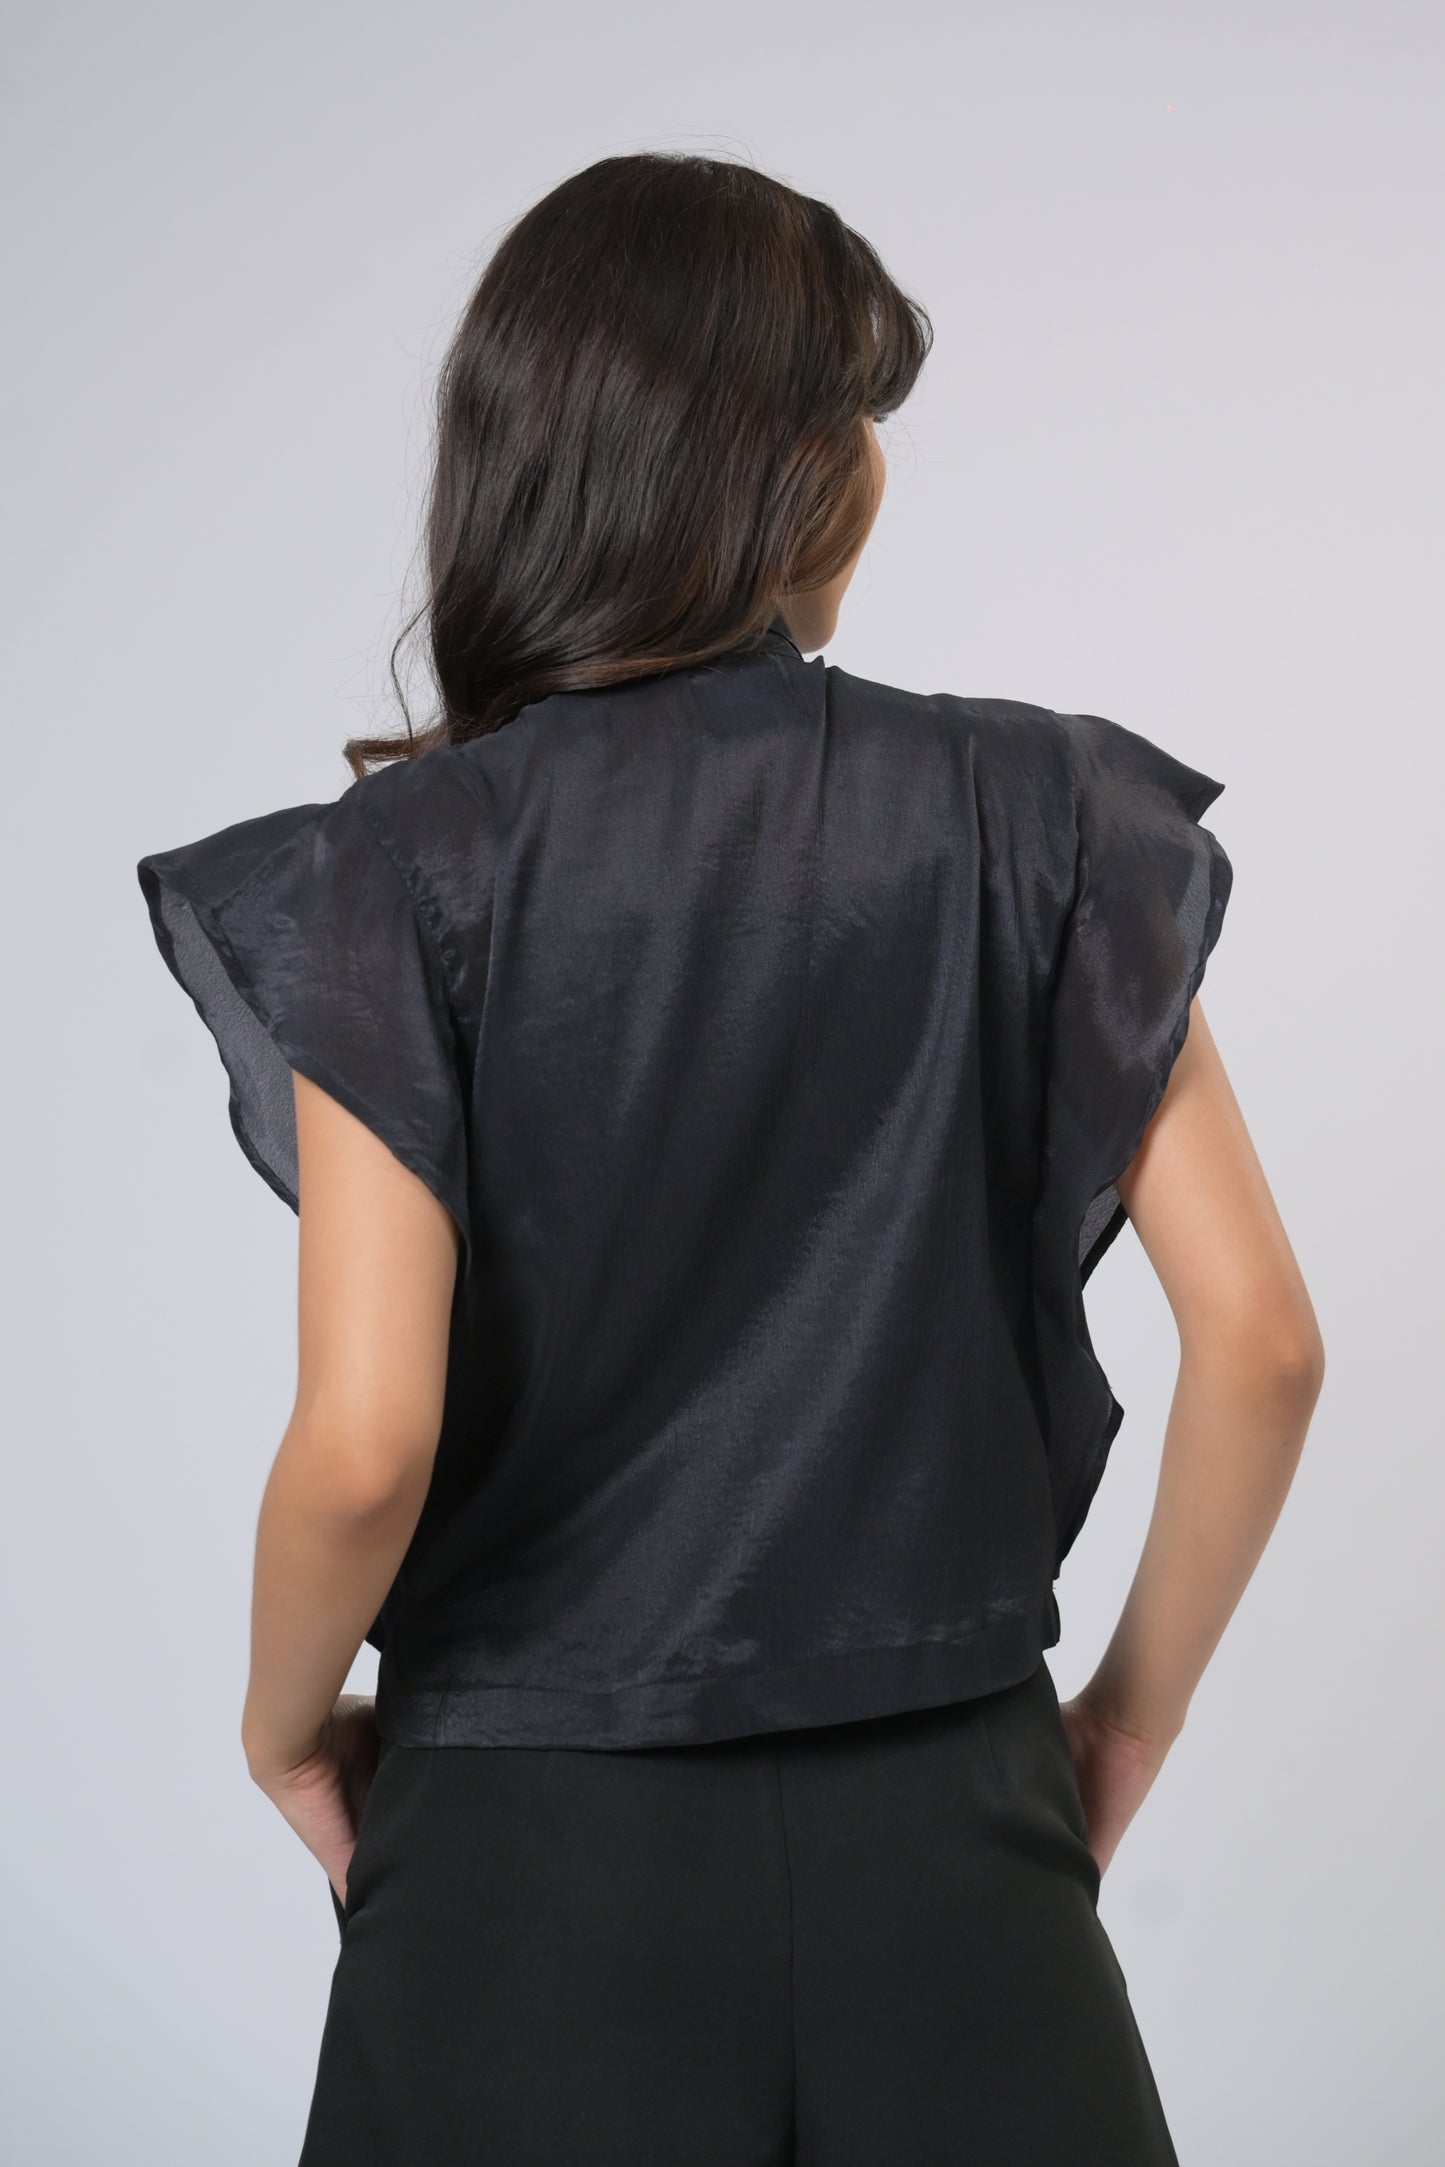 Plains & Prints X Mark Nicdao Quintin Short Sleeve Top (BLACK)